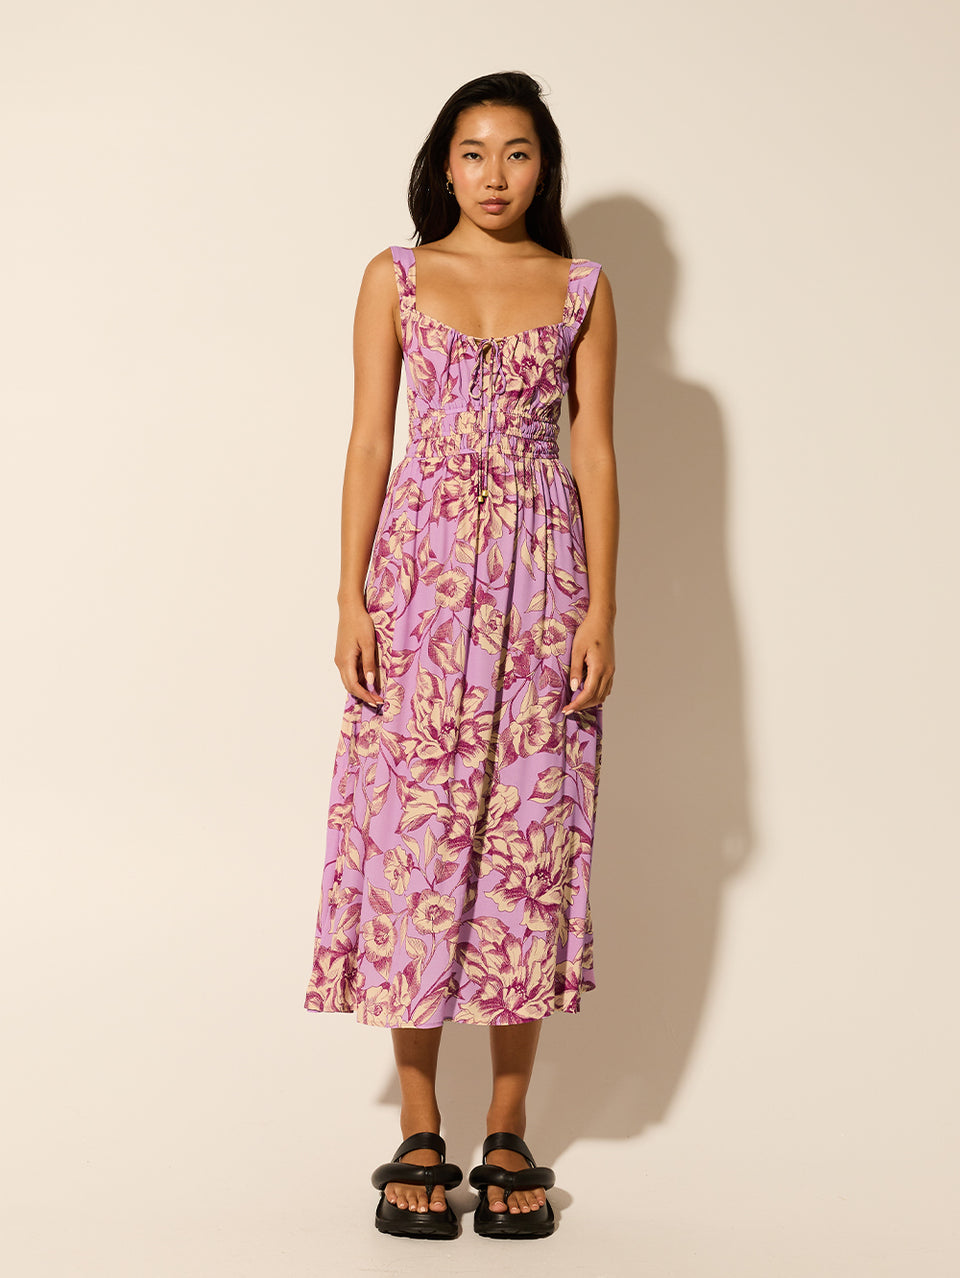 Reyna Strappy Midi Dress KIVARI | Model wears purple floral strappy midi dress